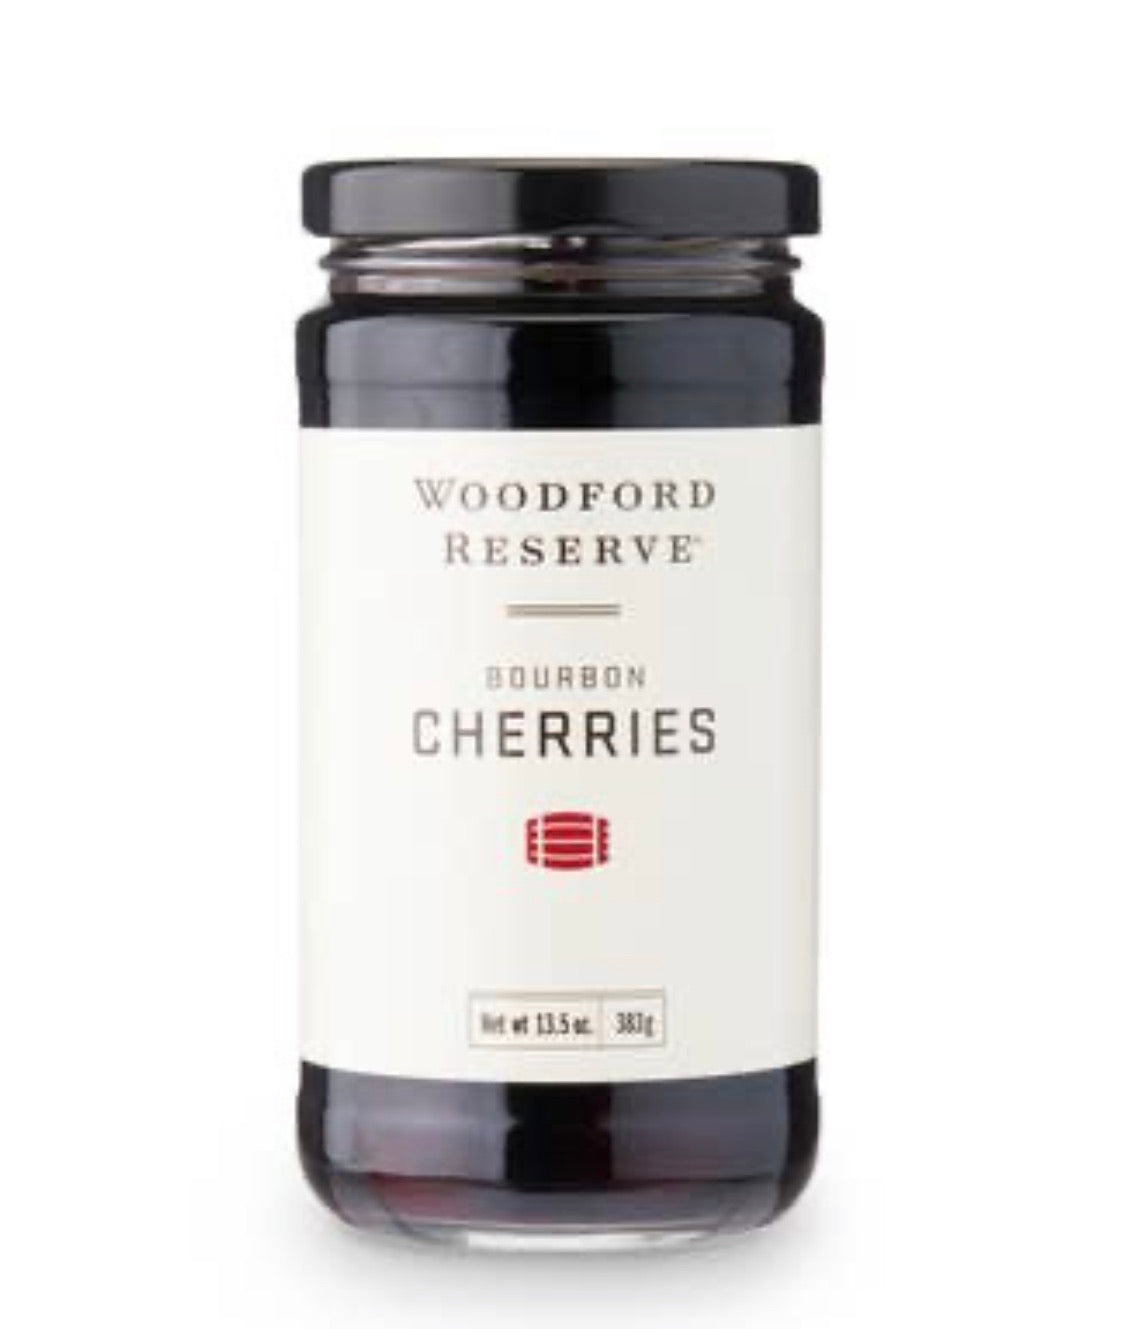 Woodford Reserve Bourbon Cherries, 13.5 oz.